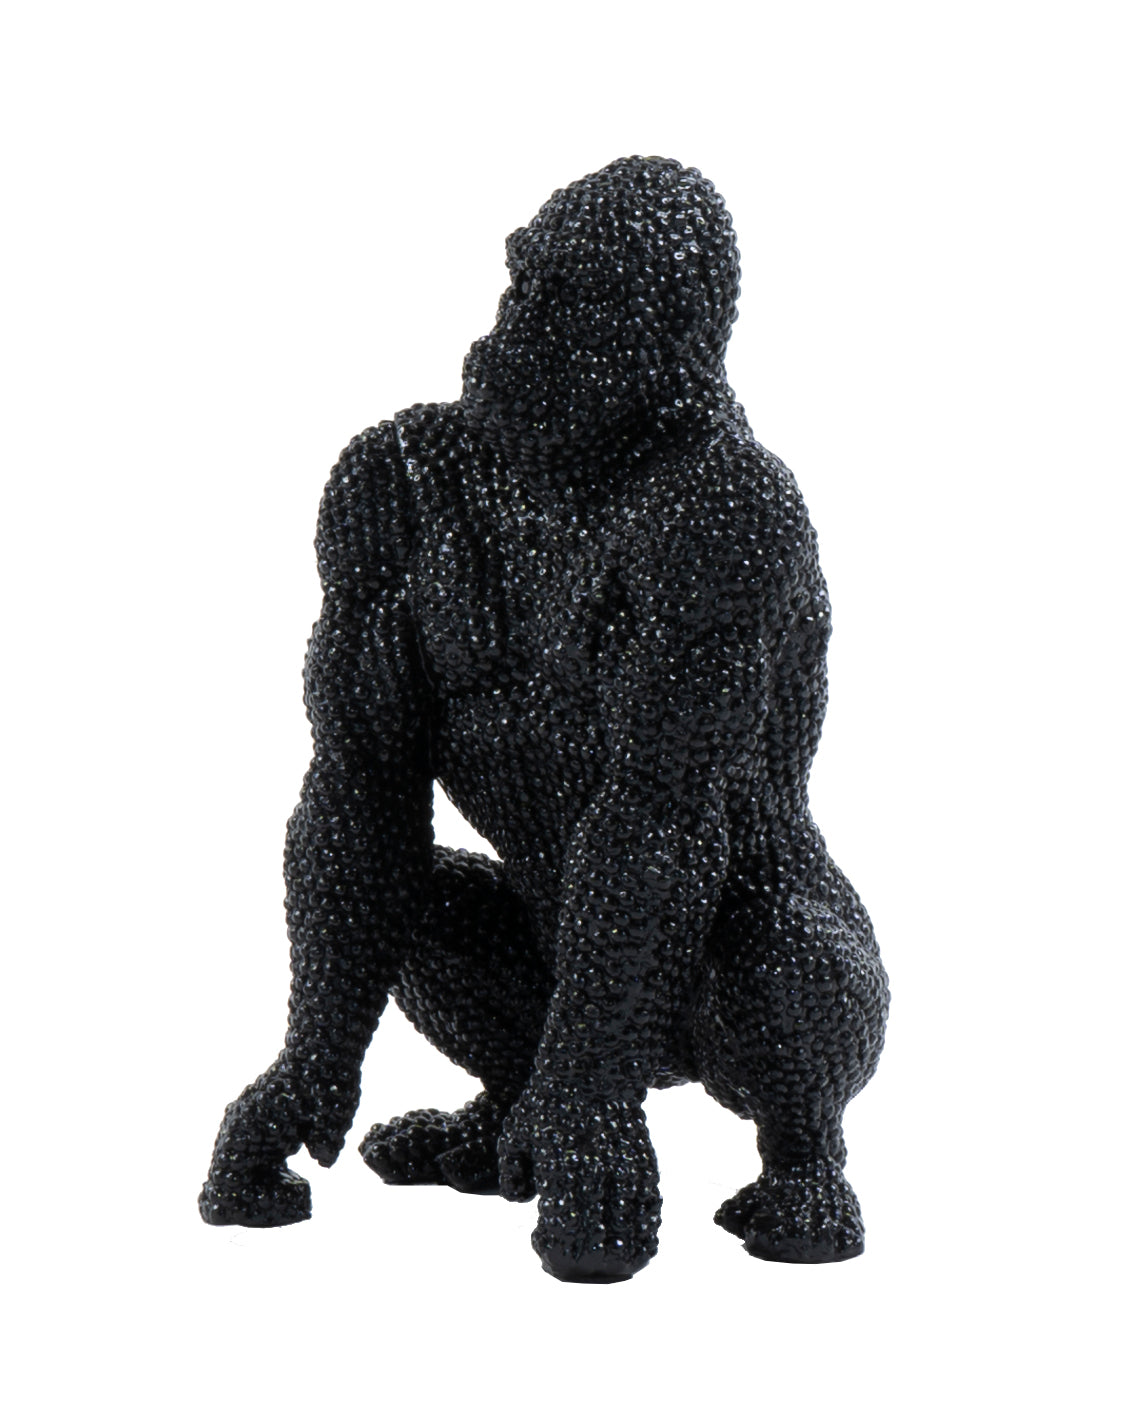 Black Gorilla Sculpture - Expo Home Decor